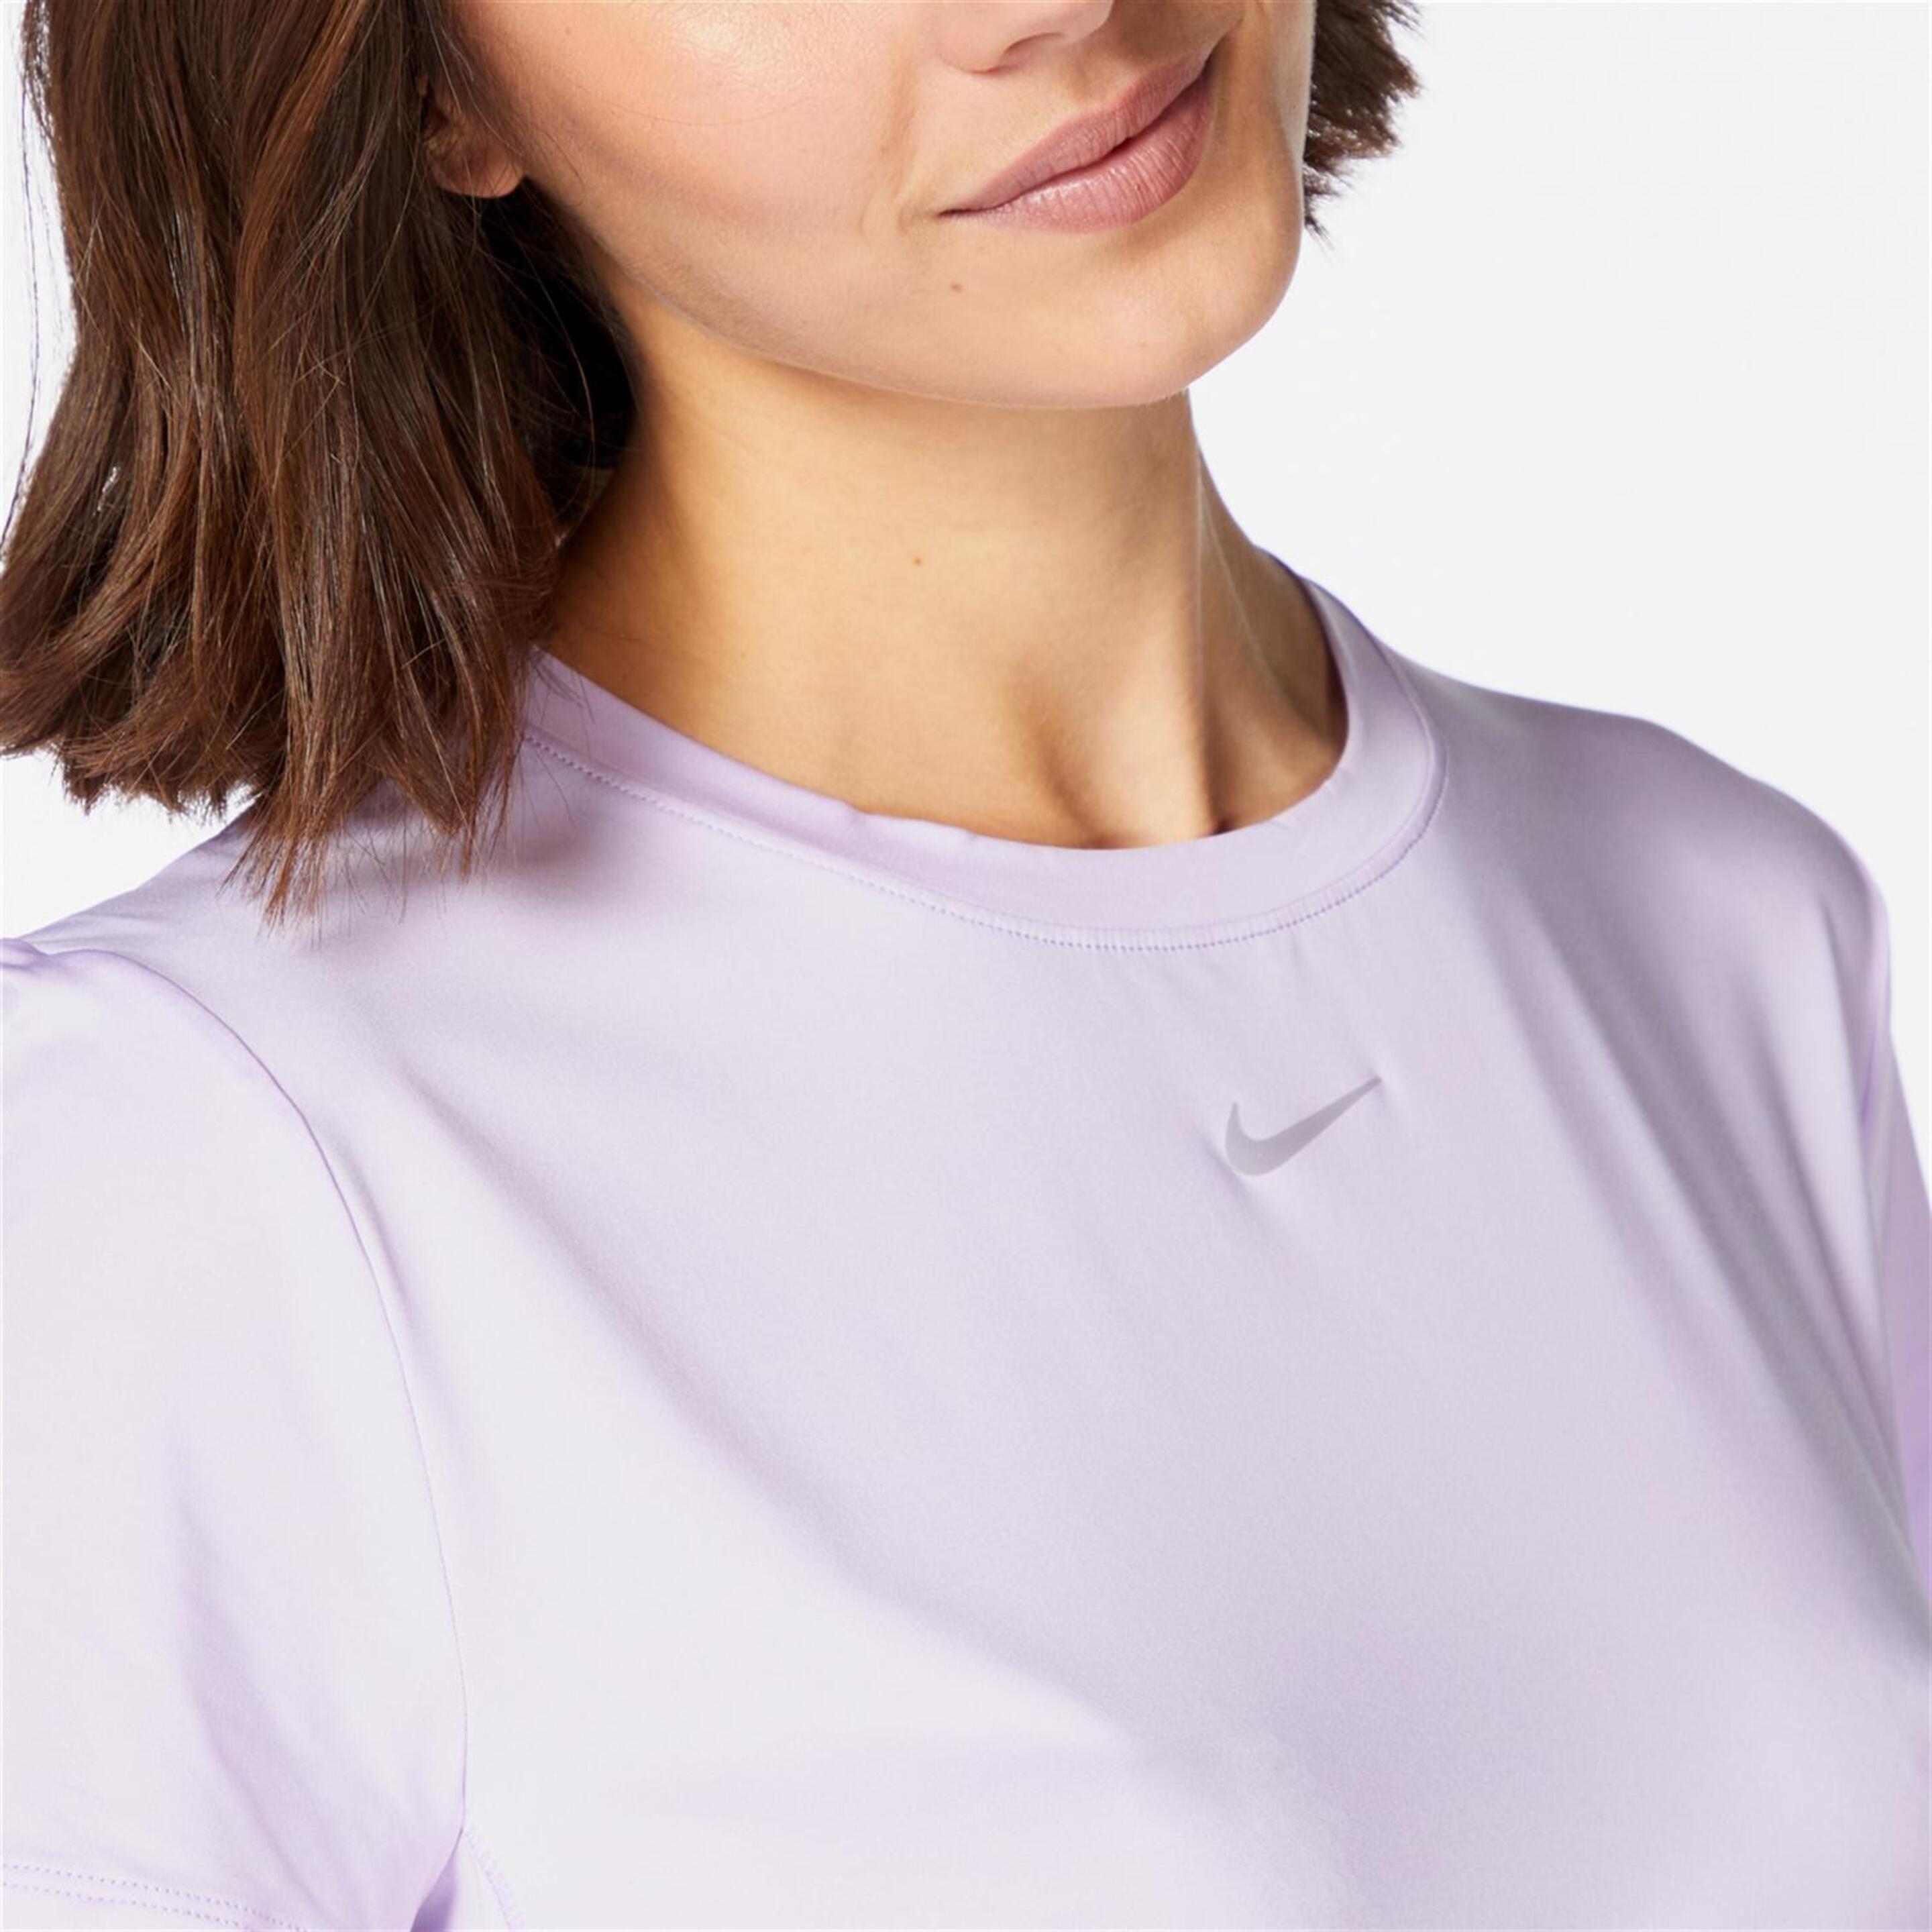 Nike One - Malva - Camiseta Fitness Mujer